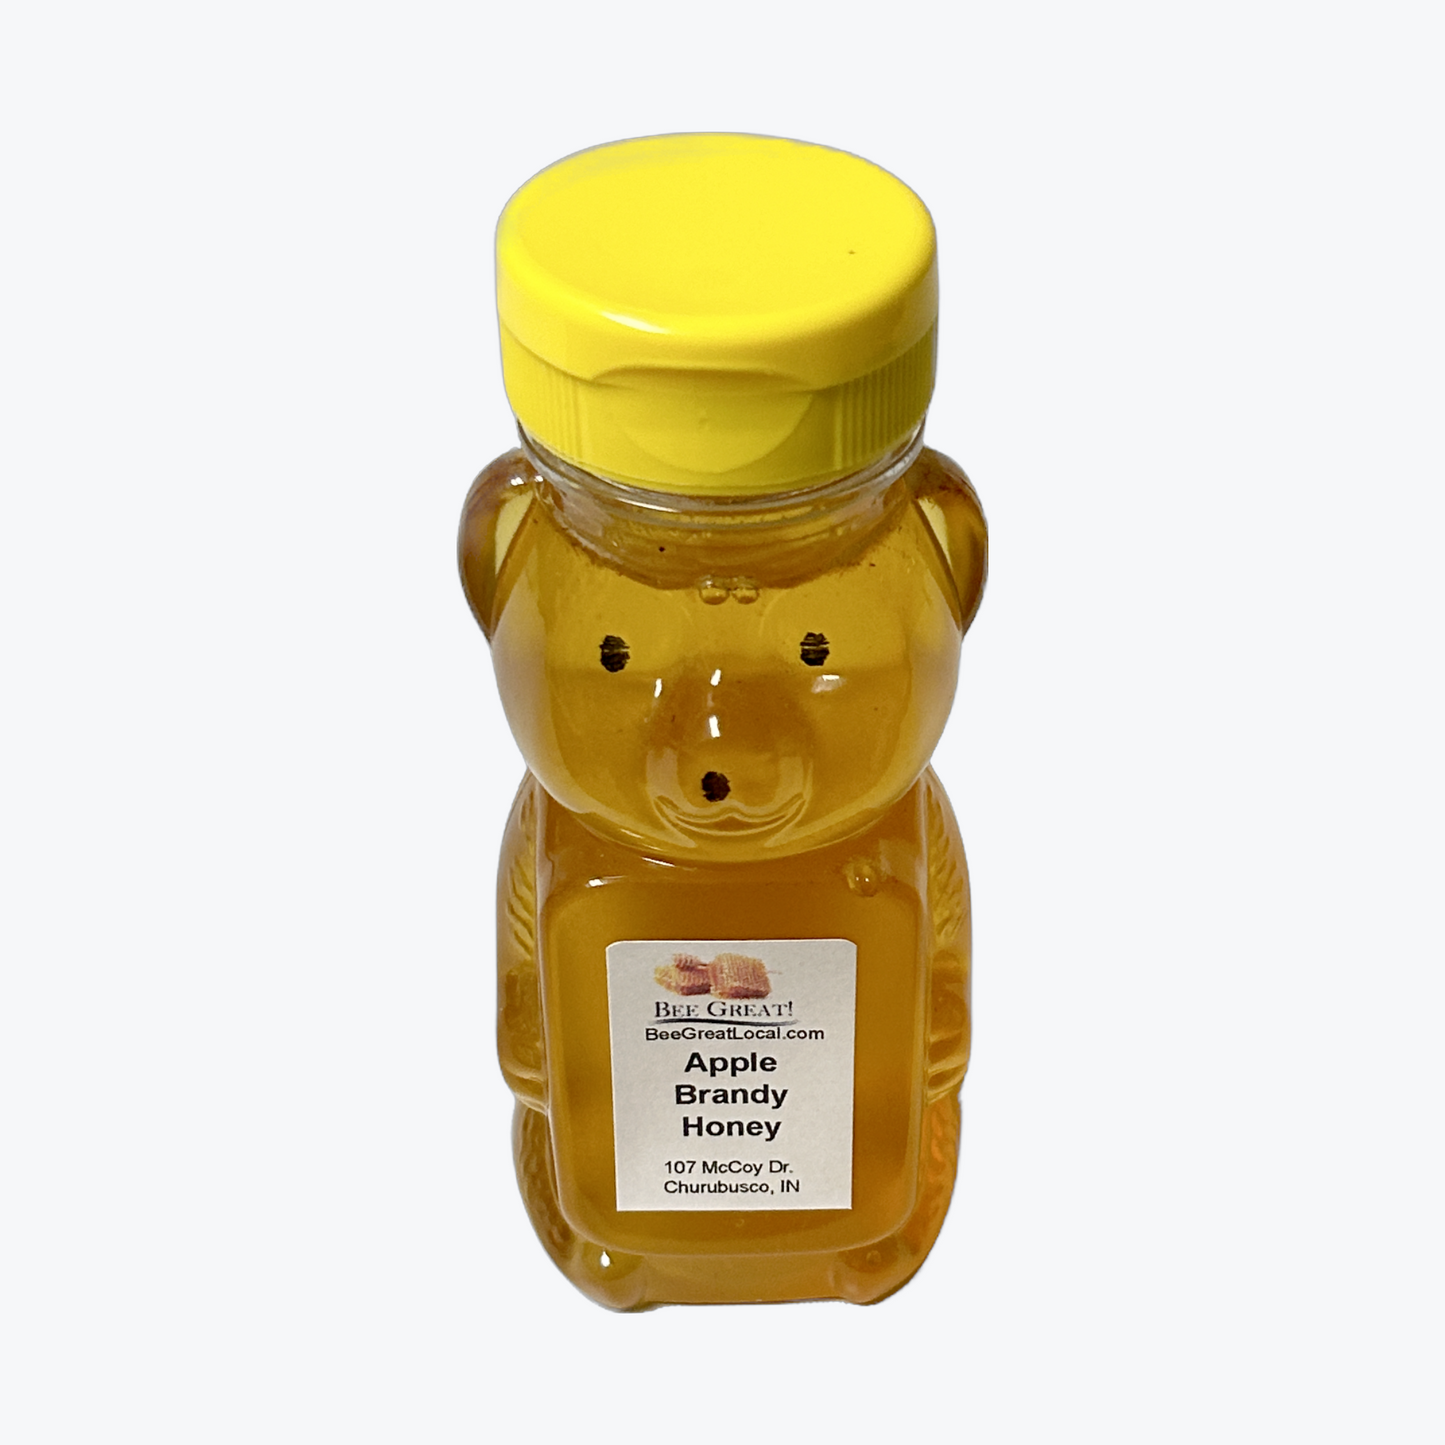 Apple Brandy Honey